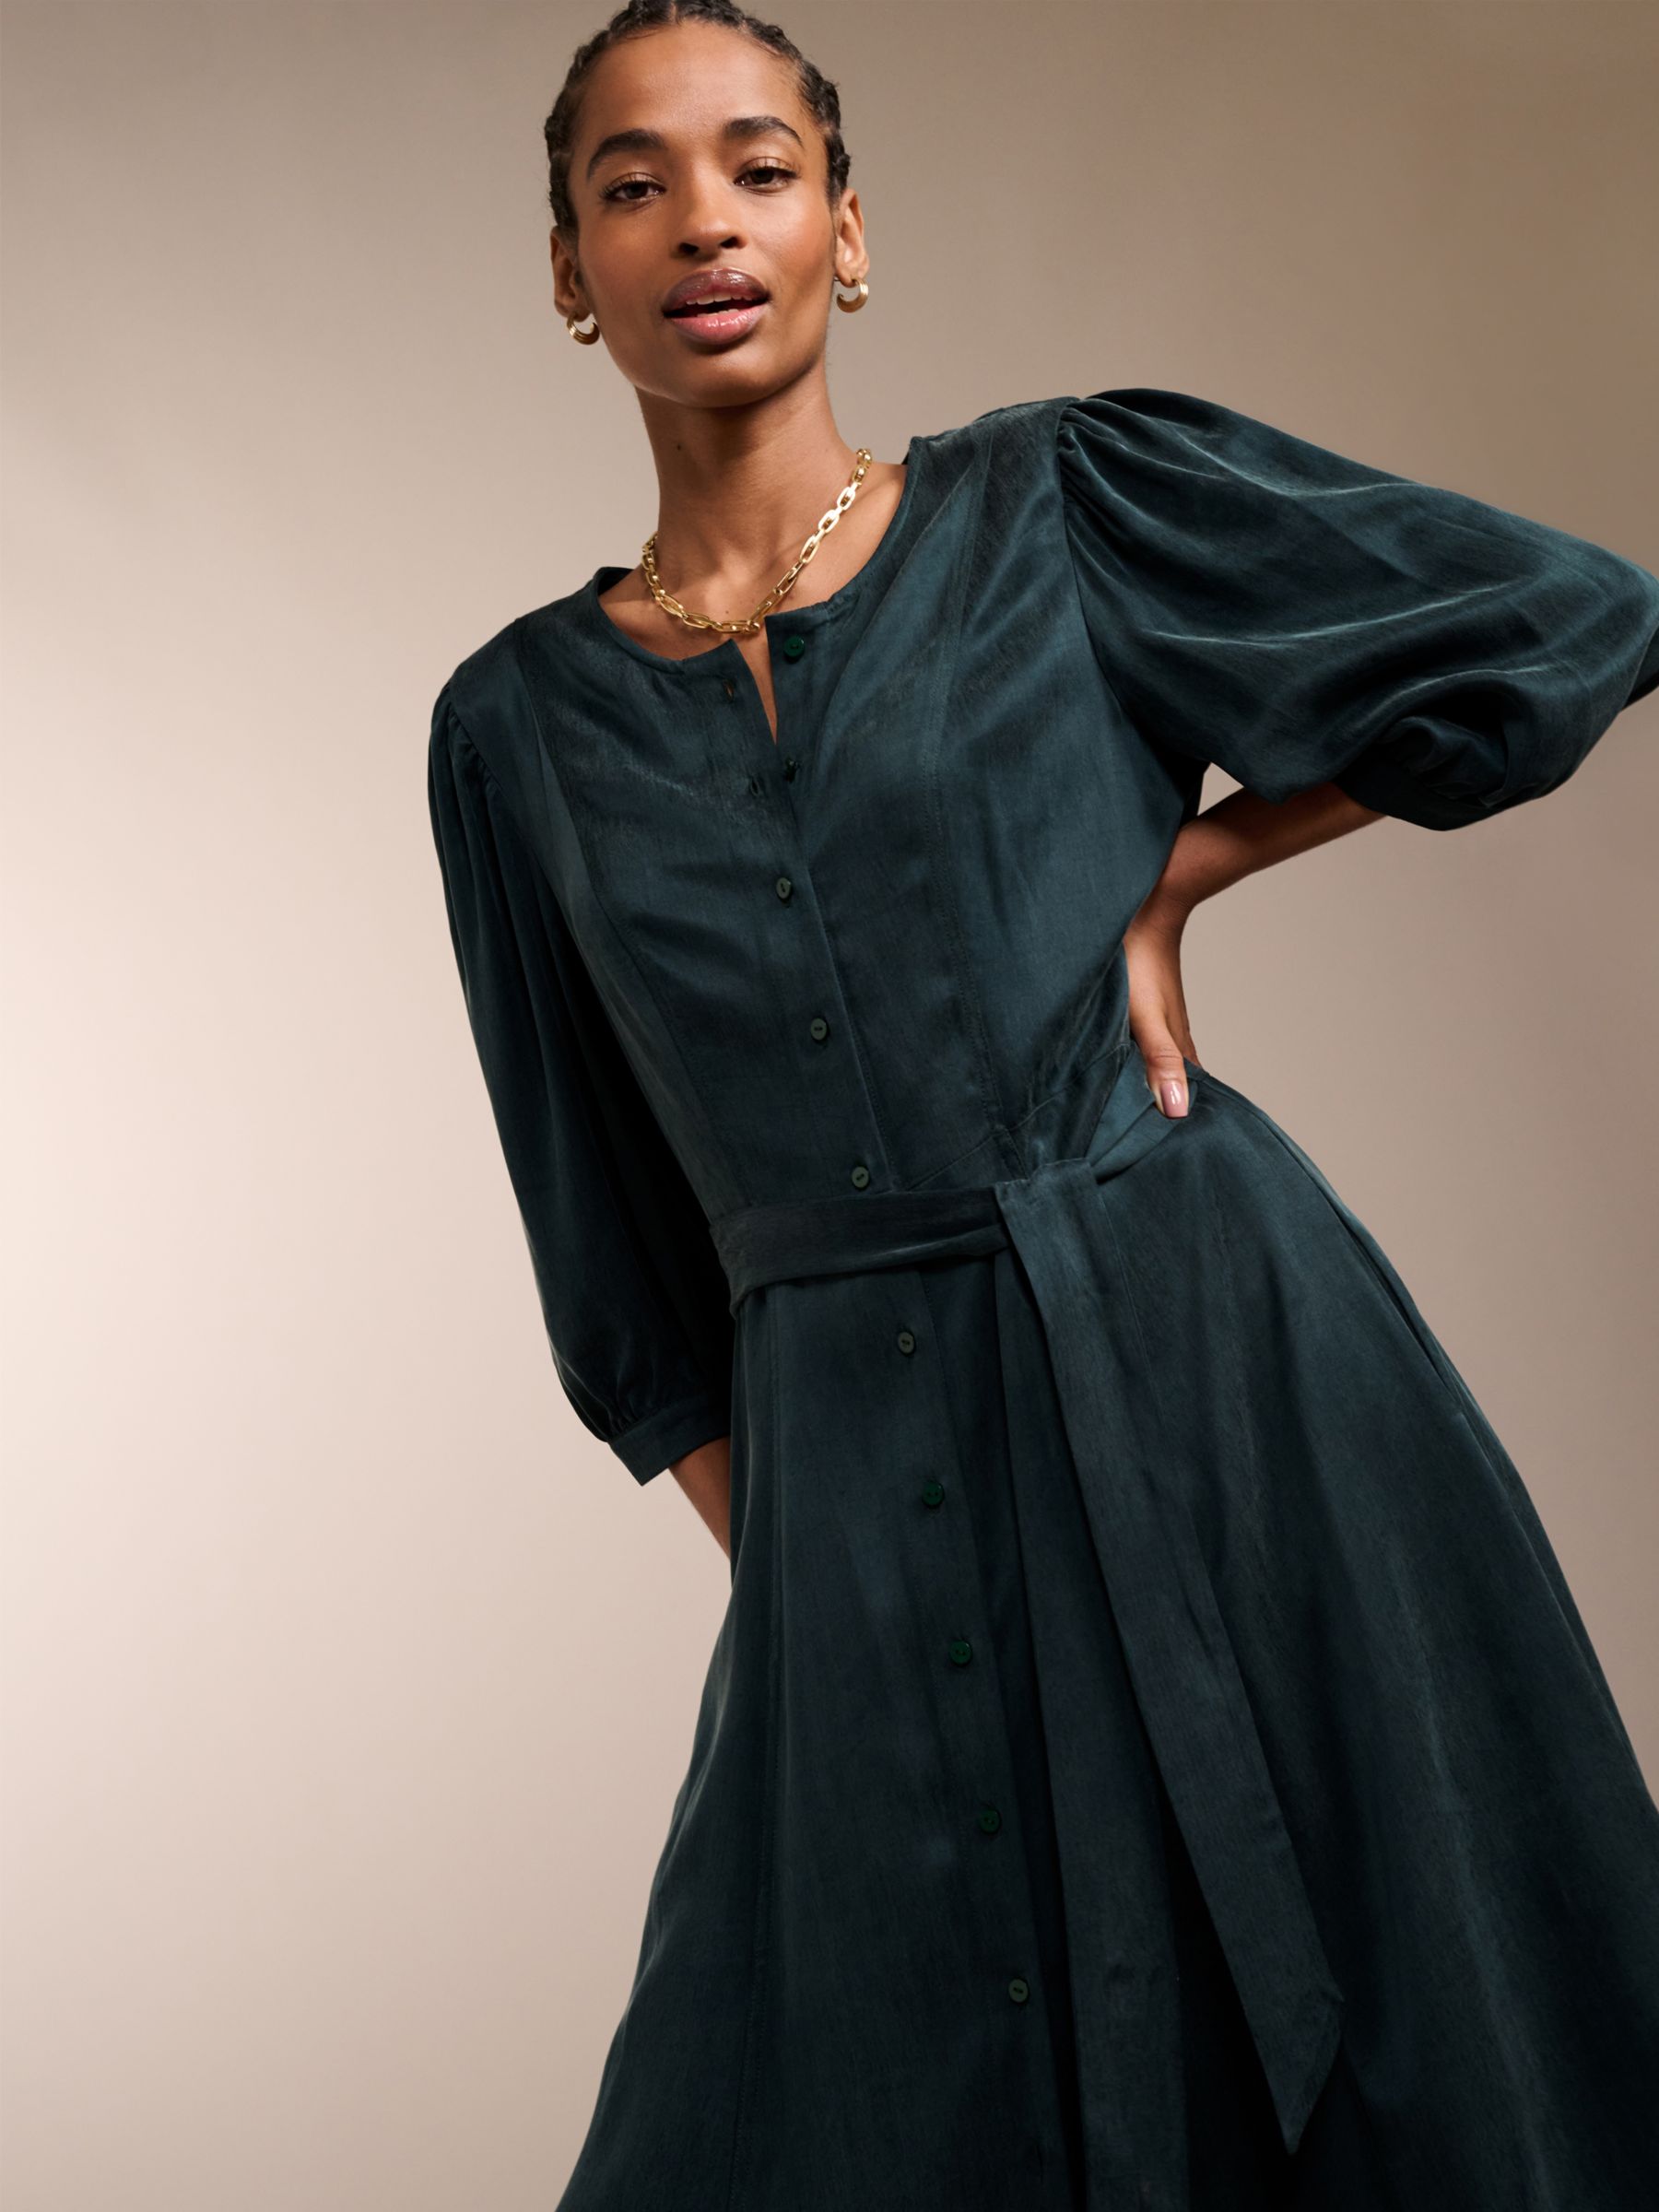 Baukjen Malin Cupro Blend Midi Dress, Dark Green at John Lewis & Partners